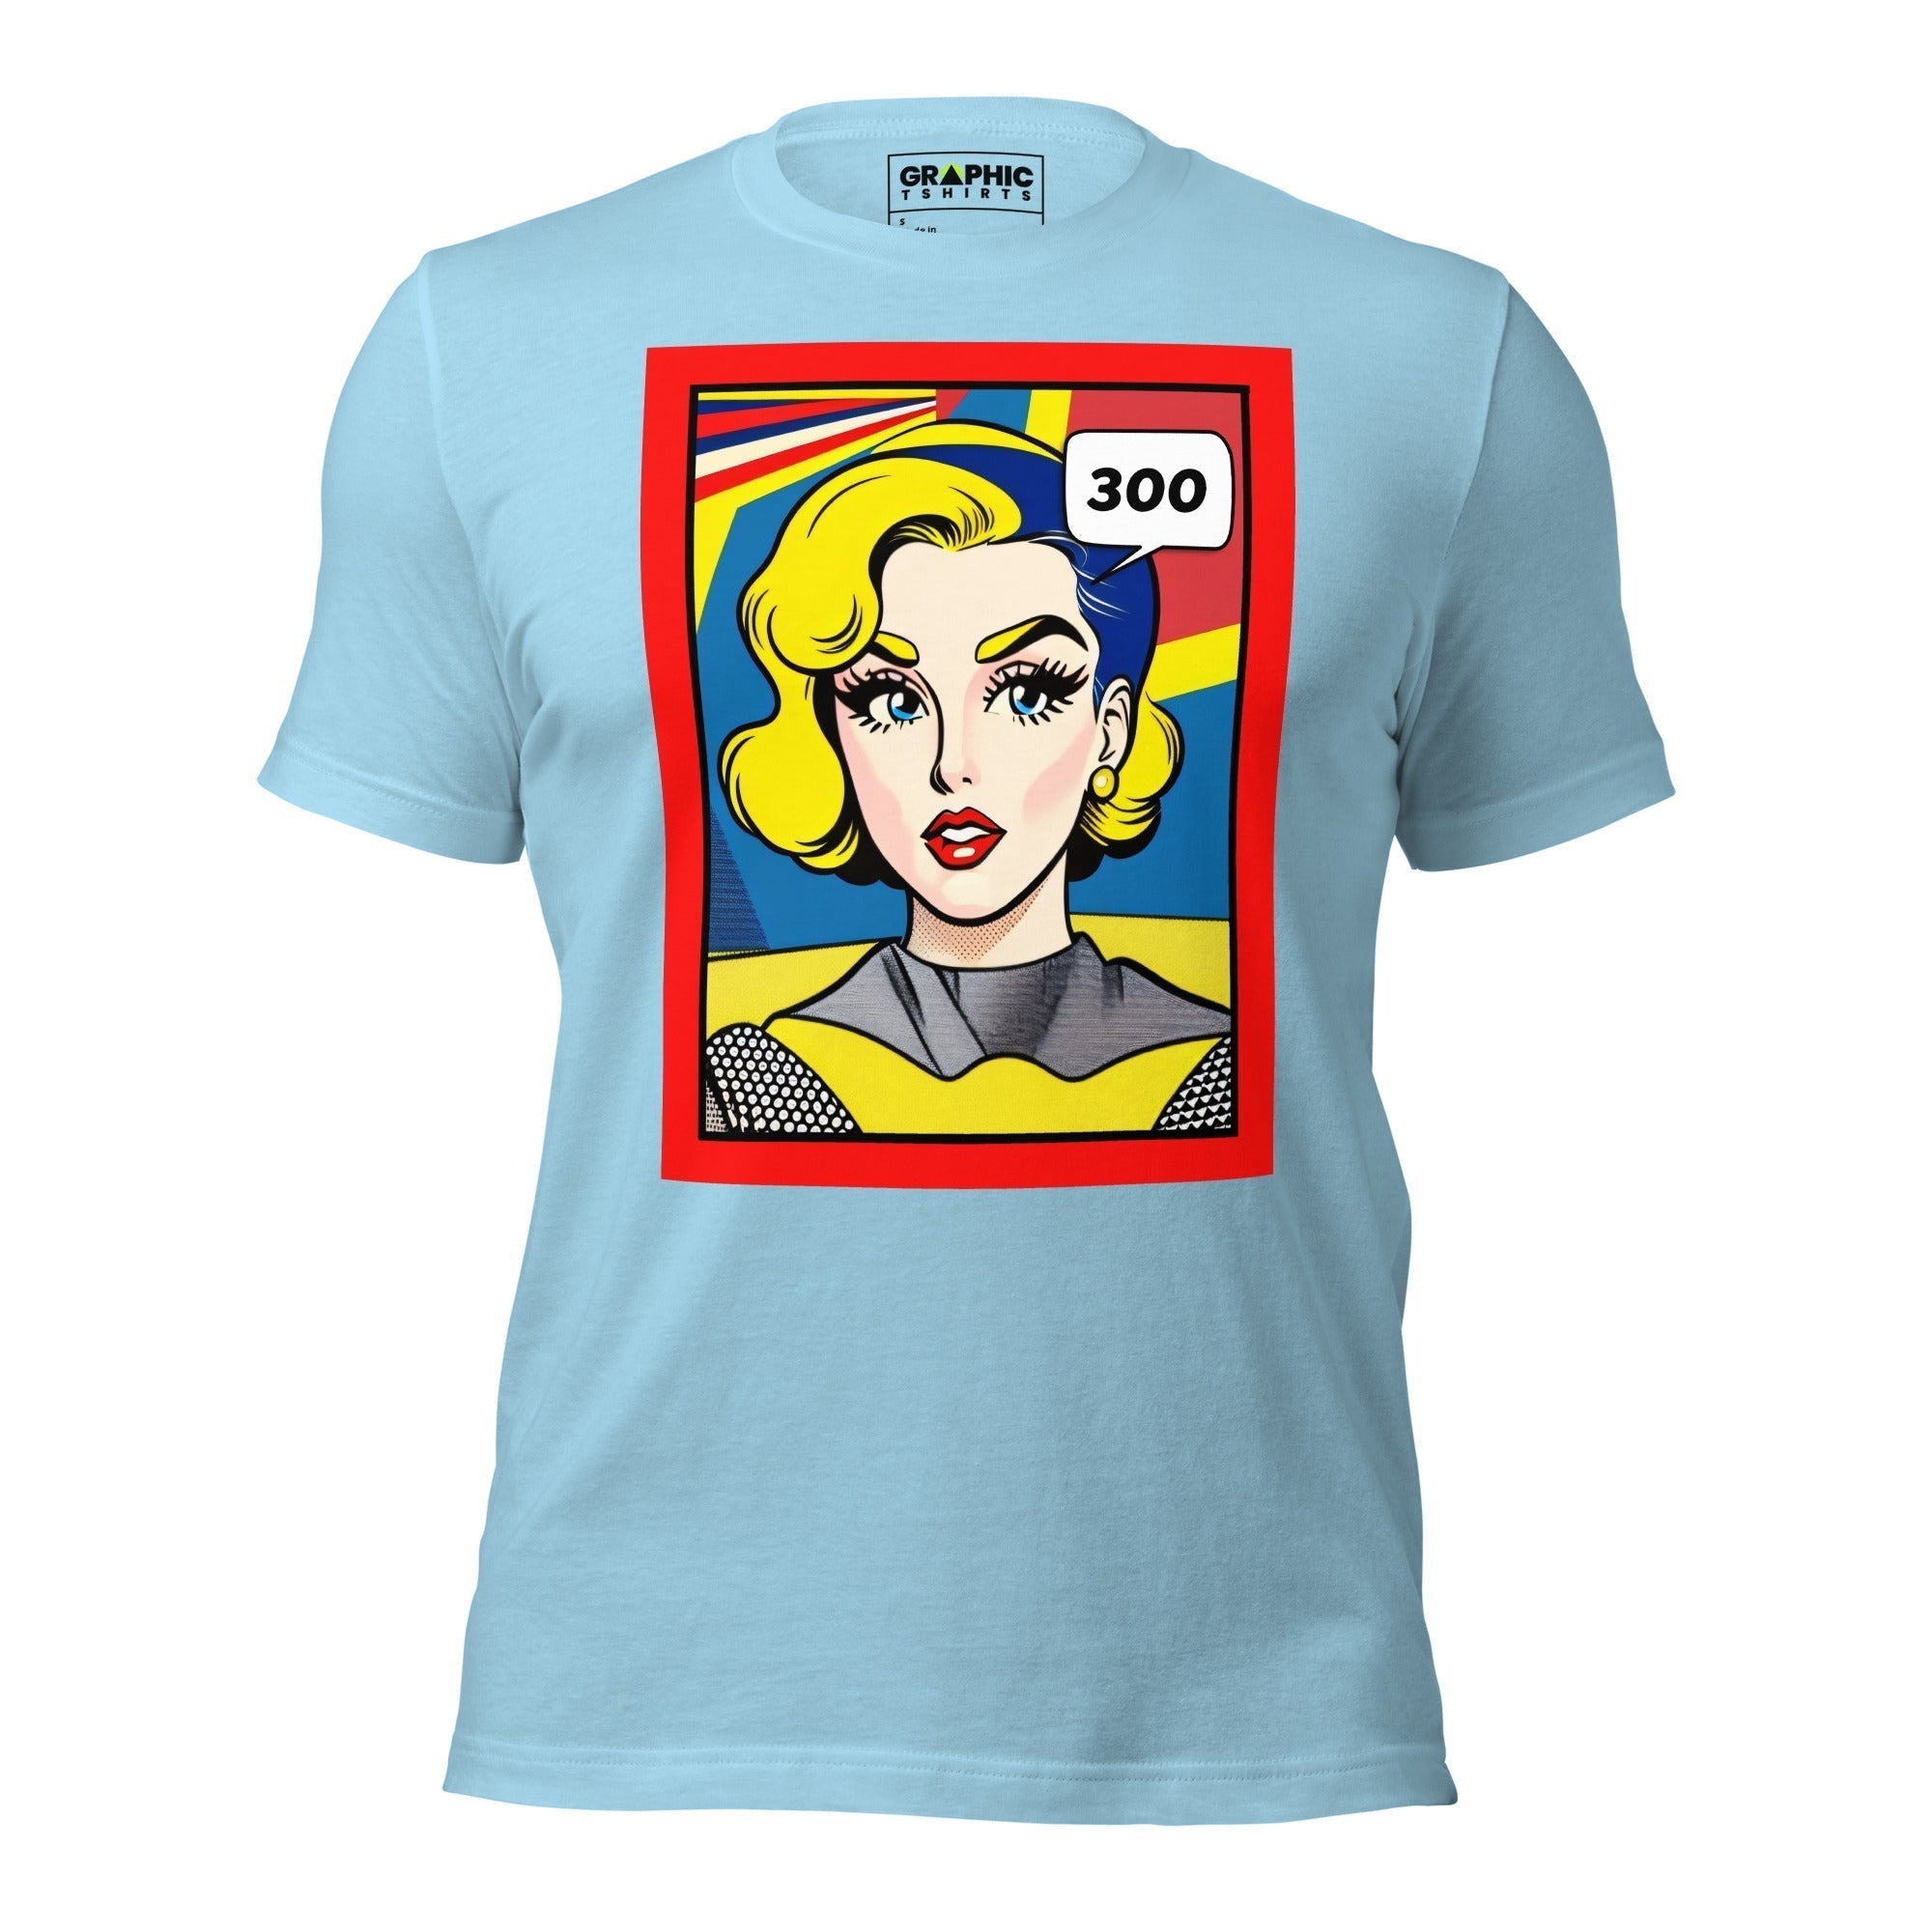 Unisex Crew Neck T-Shirt - Vintage American Comic Series v.5 - GRAPHIC T-SHIRTS